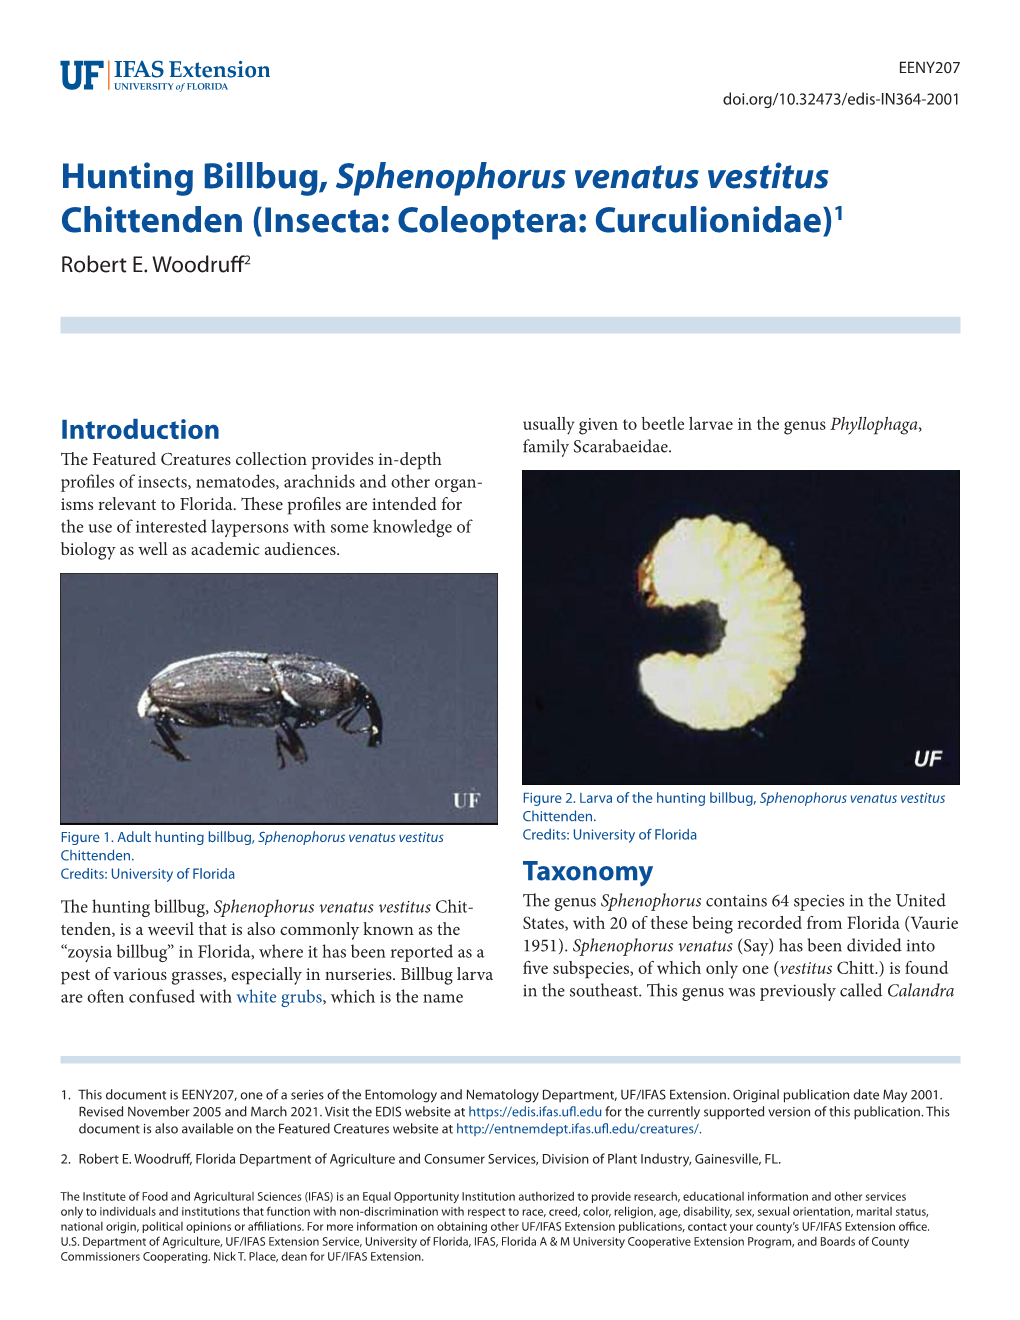 Hunting Billbug, Sphenophorus Venatus Vestitus Chittenden (Insecta: Coleoptera: Curculionidae)1 Robert E